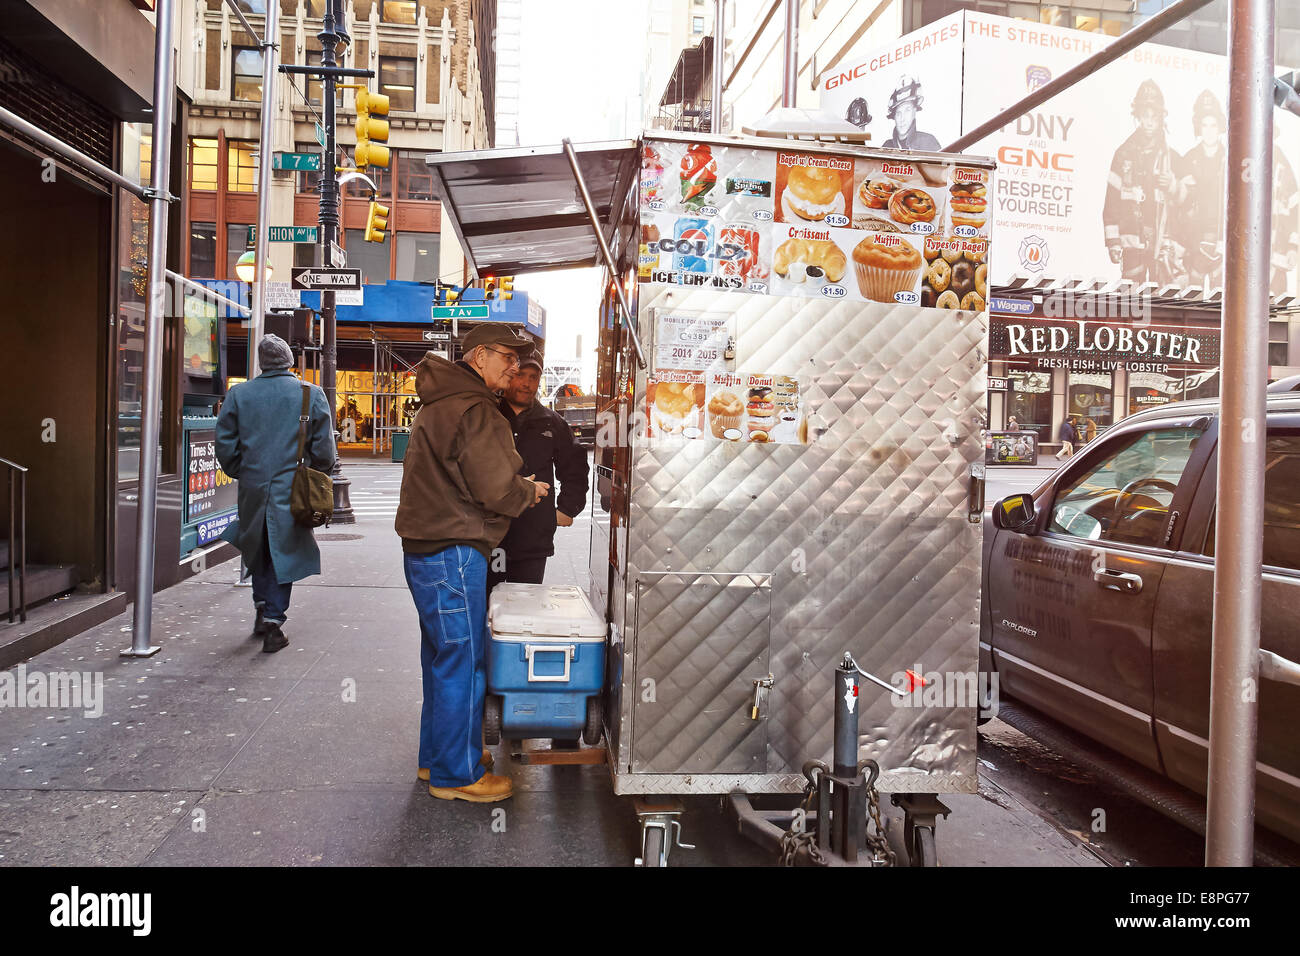 Street vendor cart and customers. Stock Photo